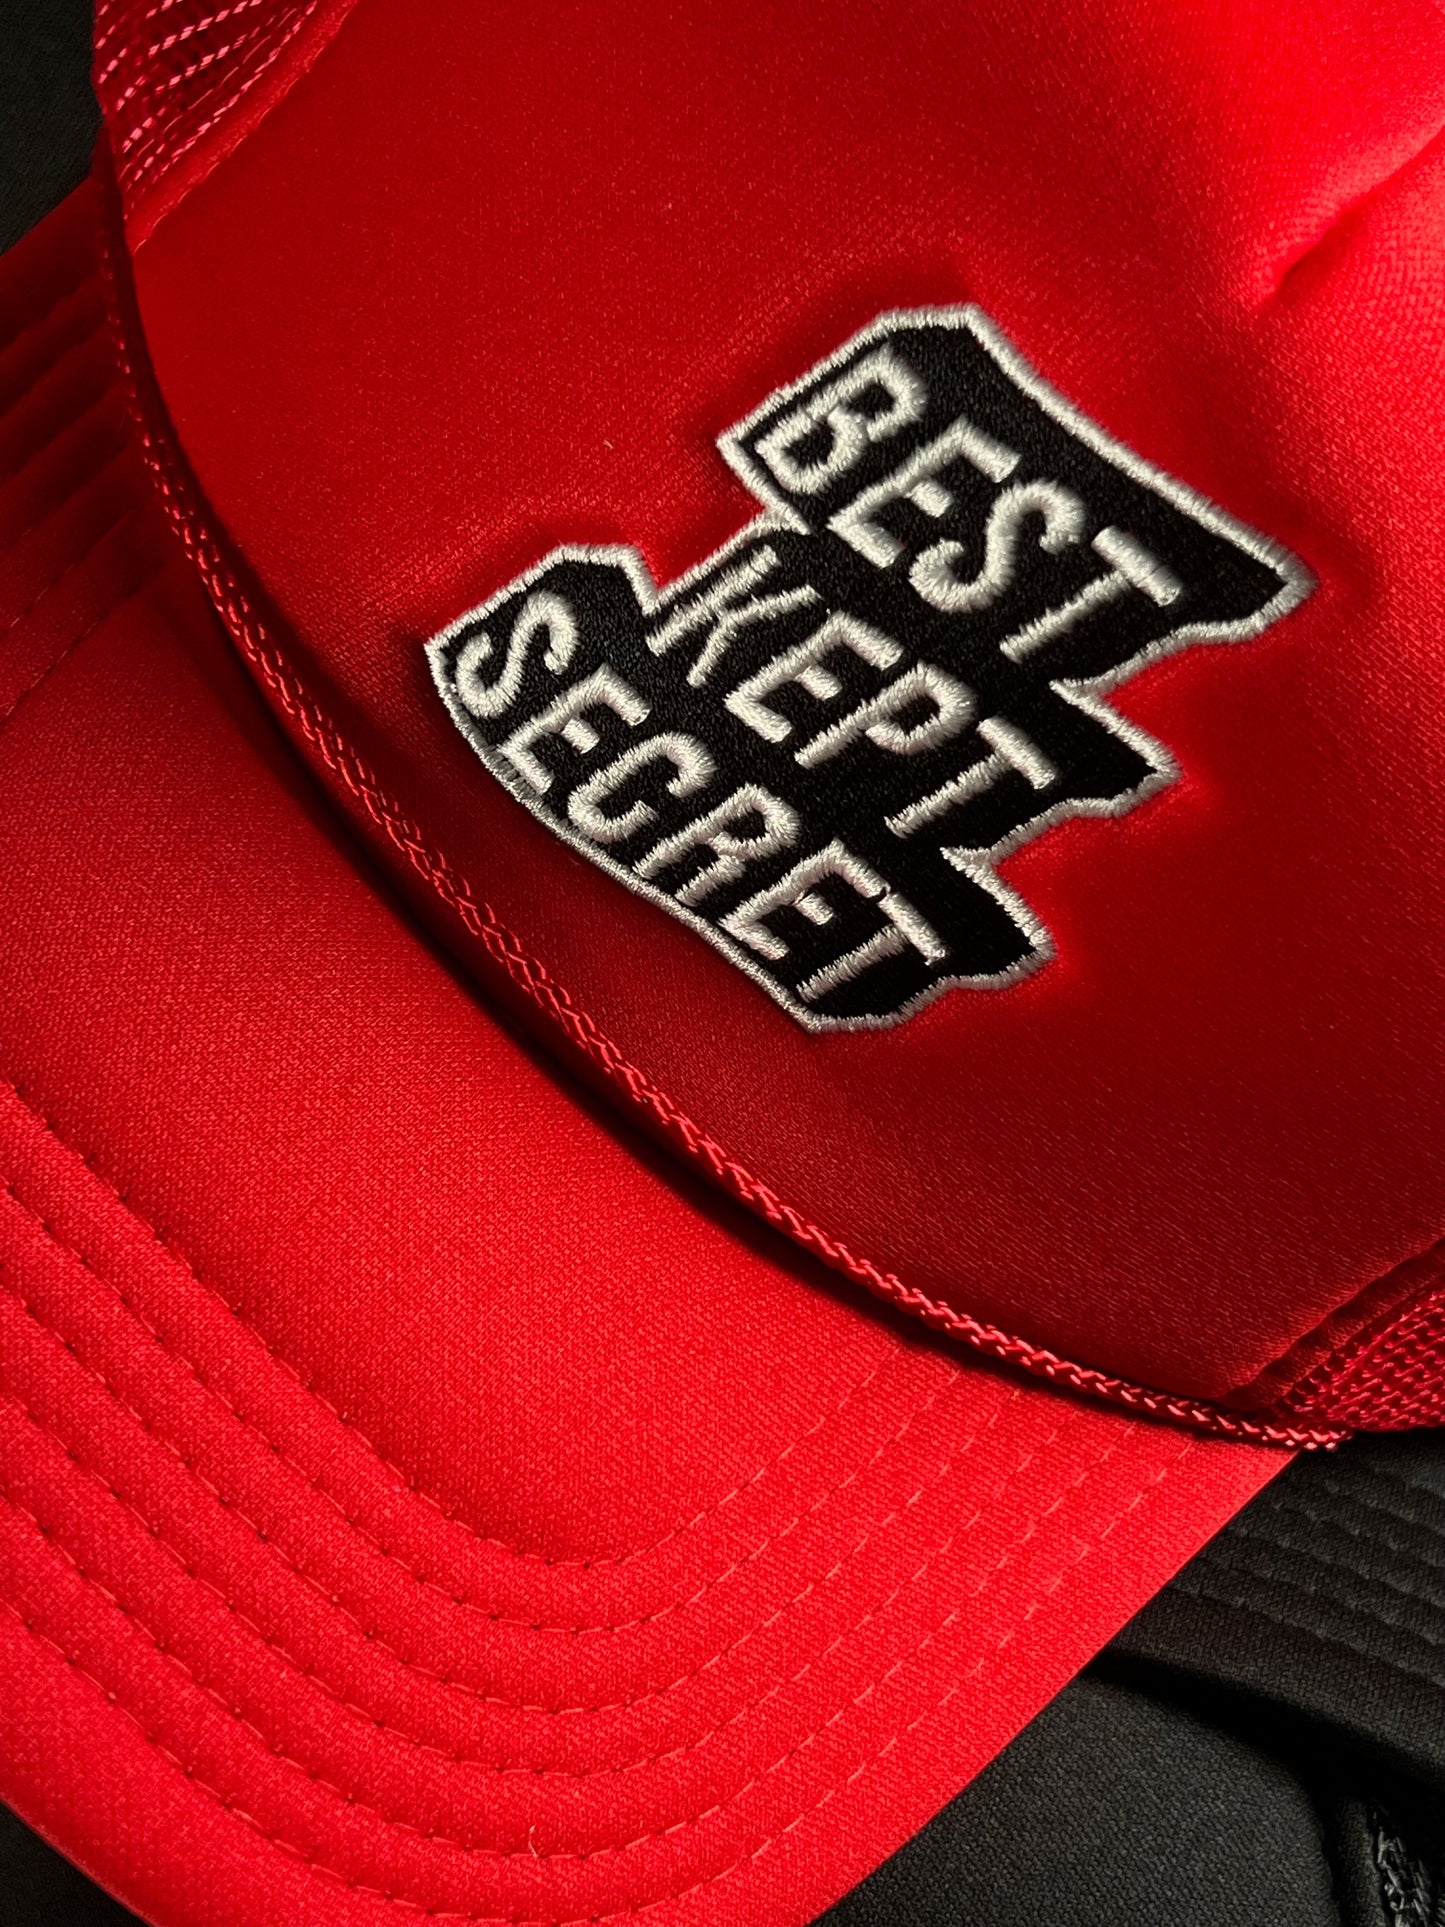 Best Kept Secret Solid Trucker Hat (Red)